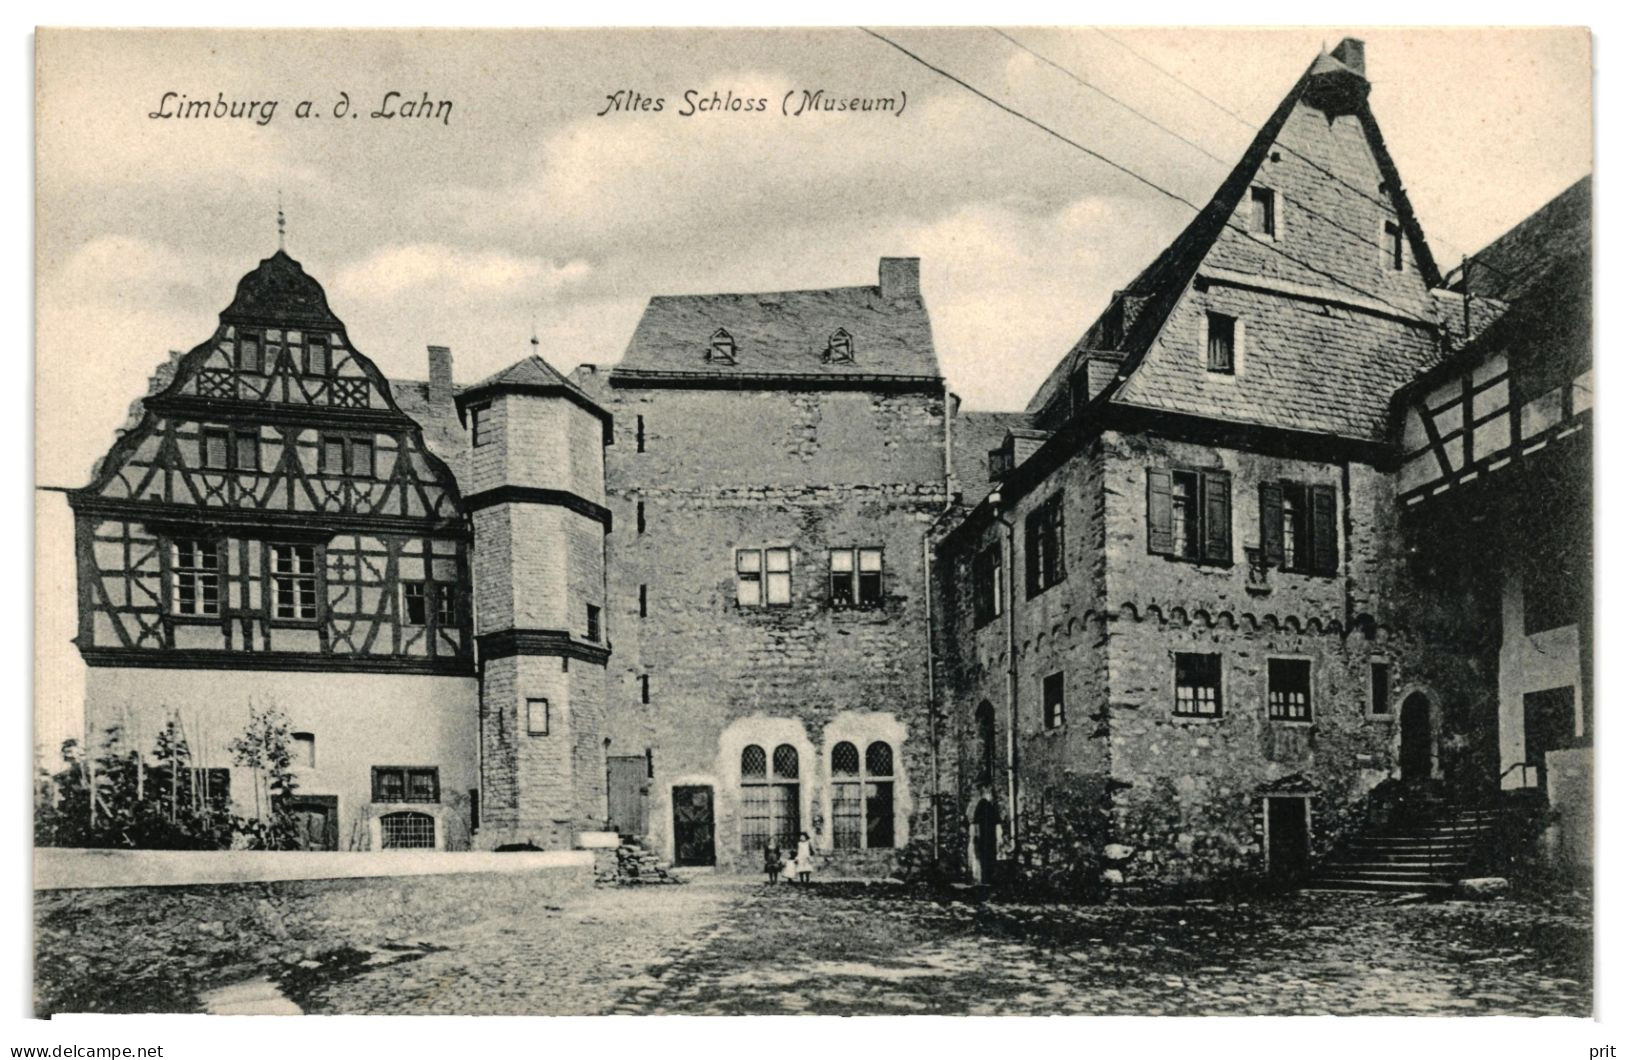 Limburg A. D. Lahn, Altes Schloss (Museum) 1906 Unused Real Photo Postcard. Publisher Ludwig Feist, Mainz - Limburg